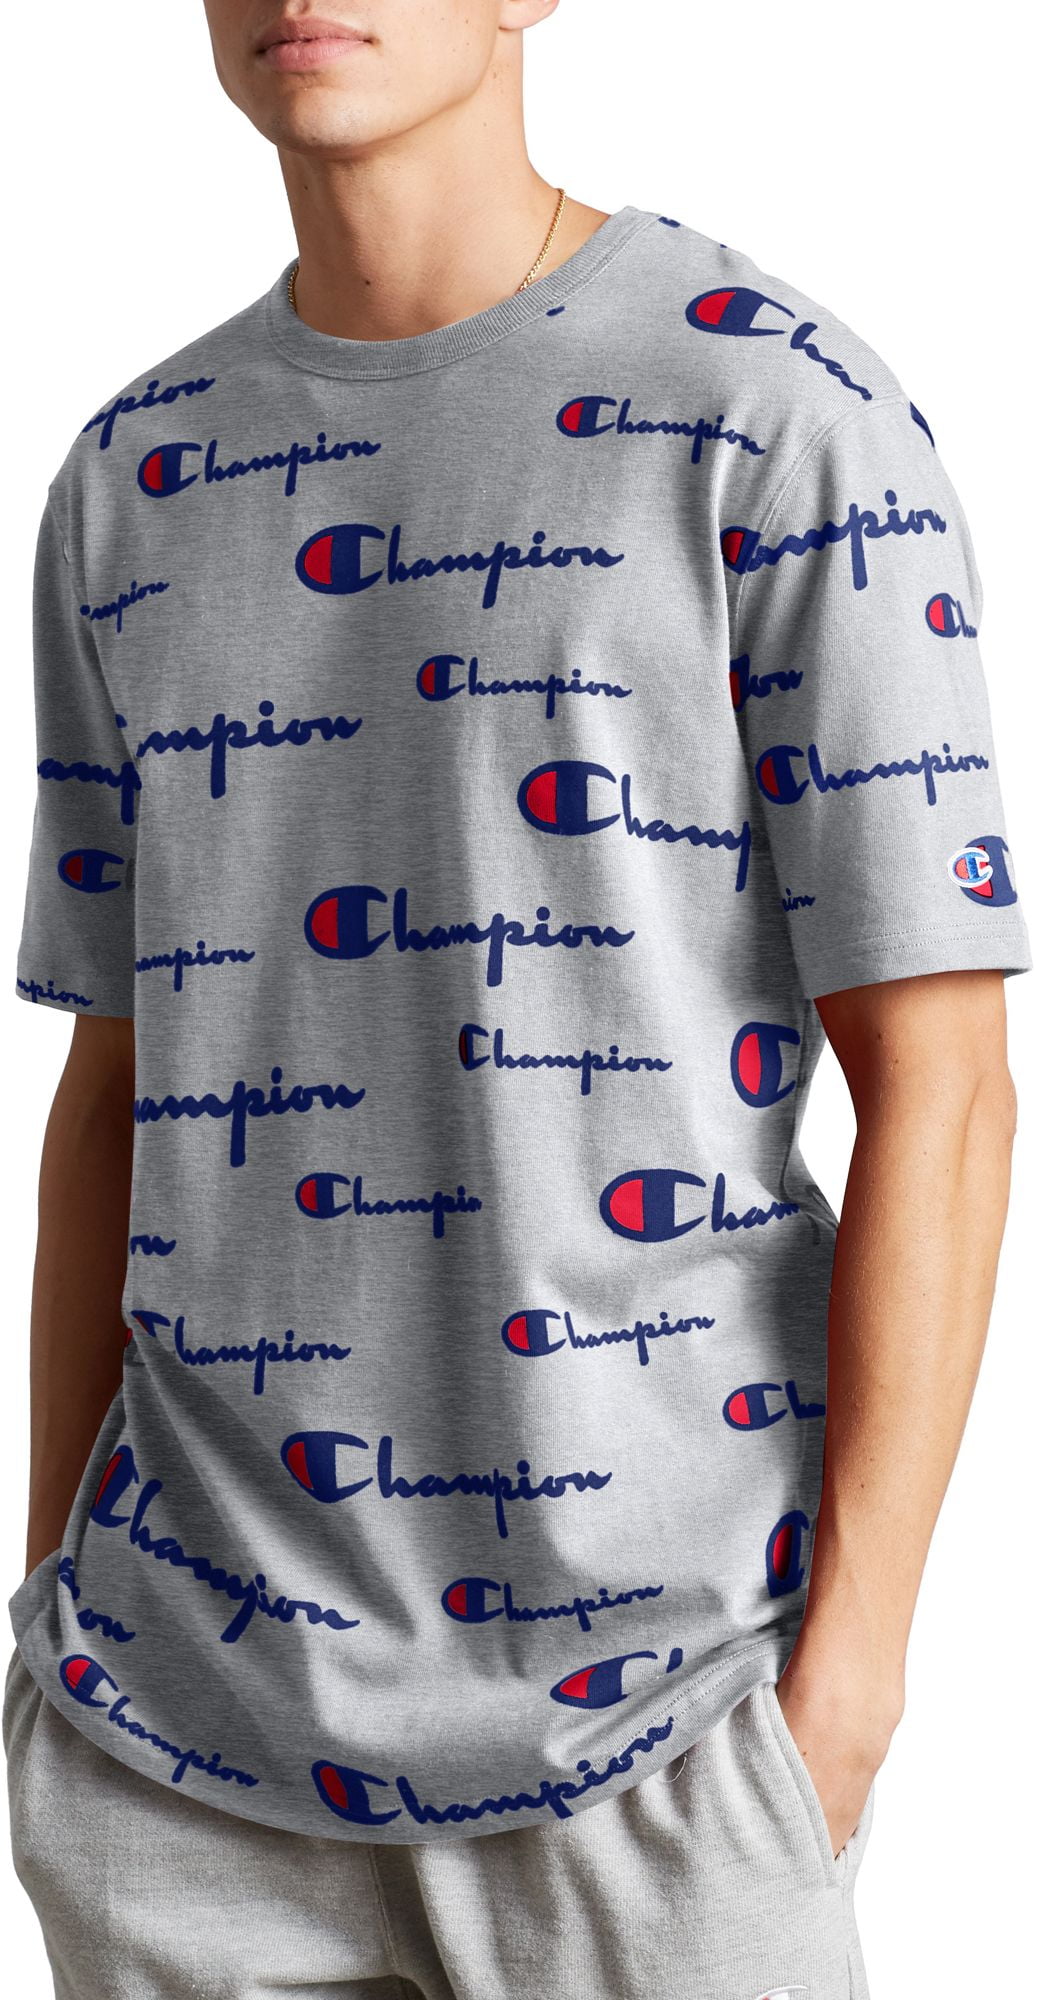 champion all over logo shirt